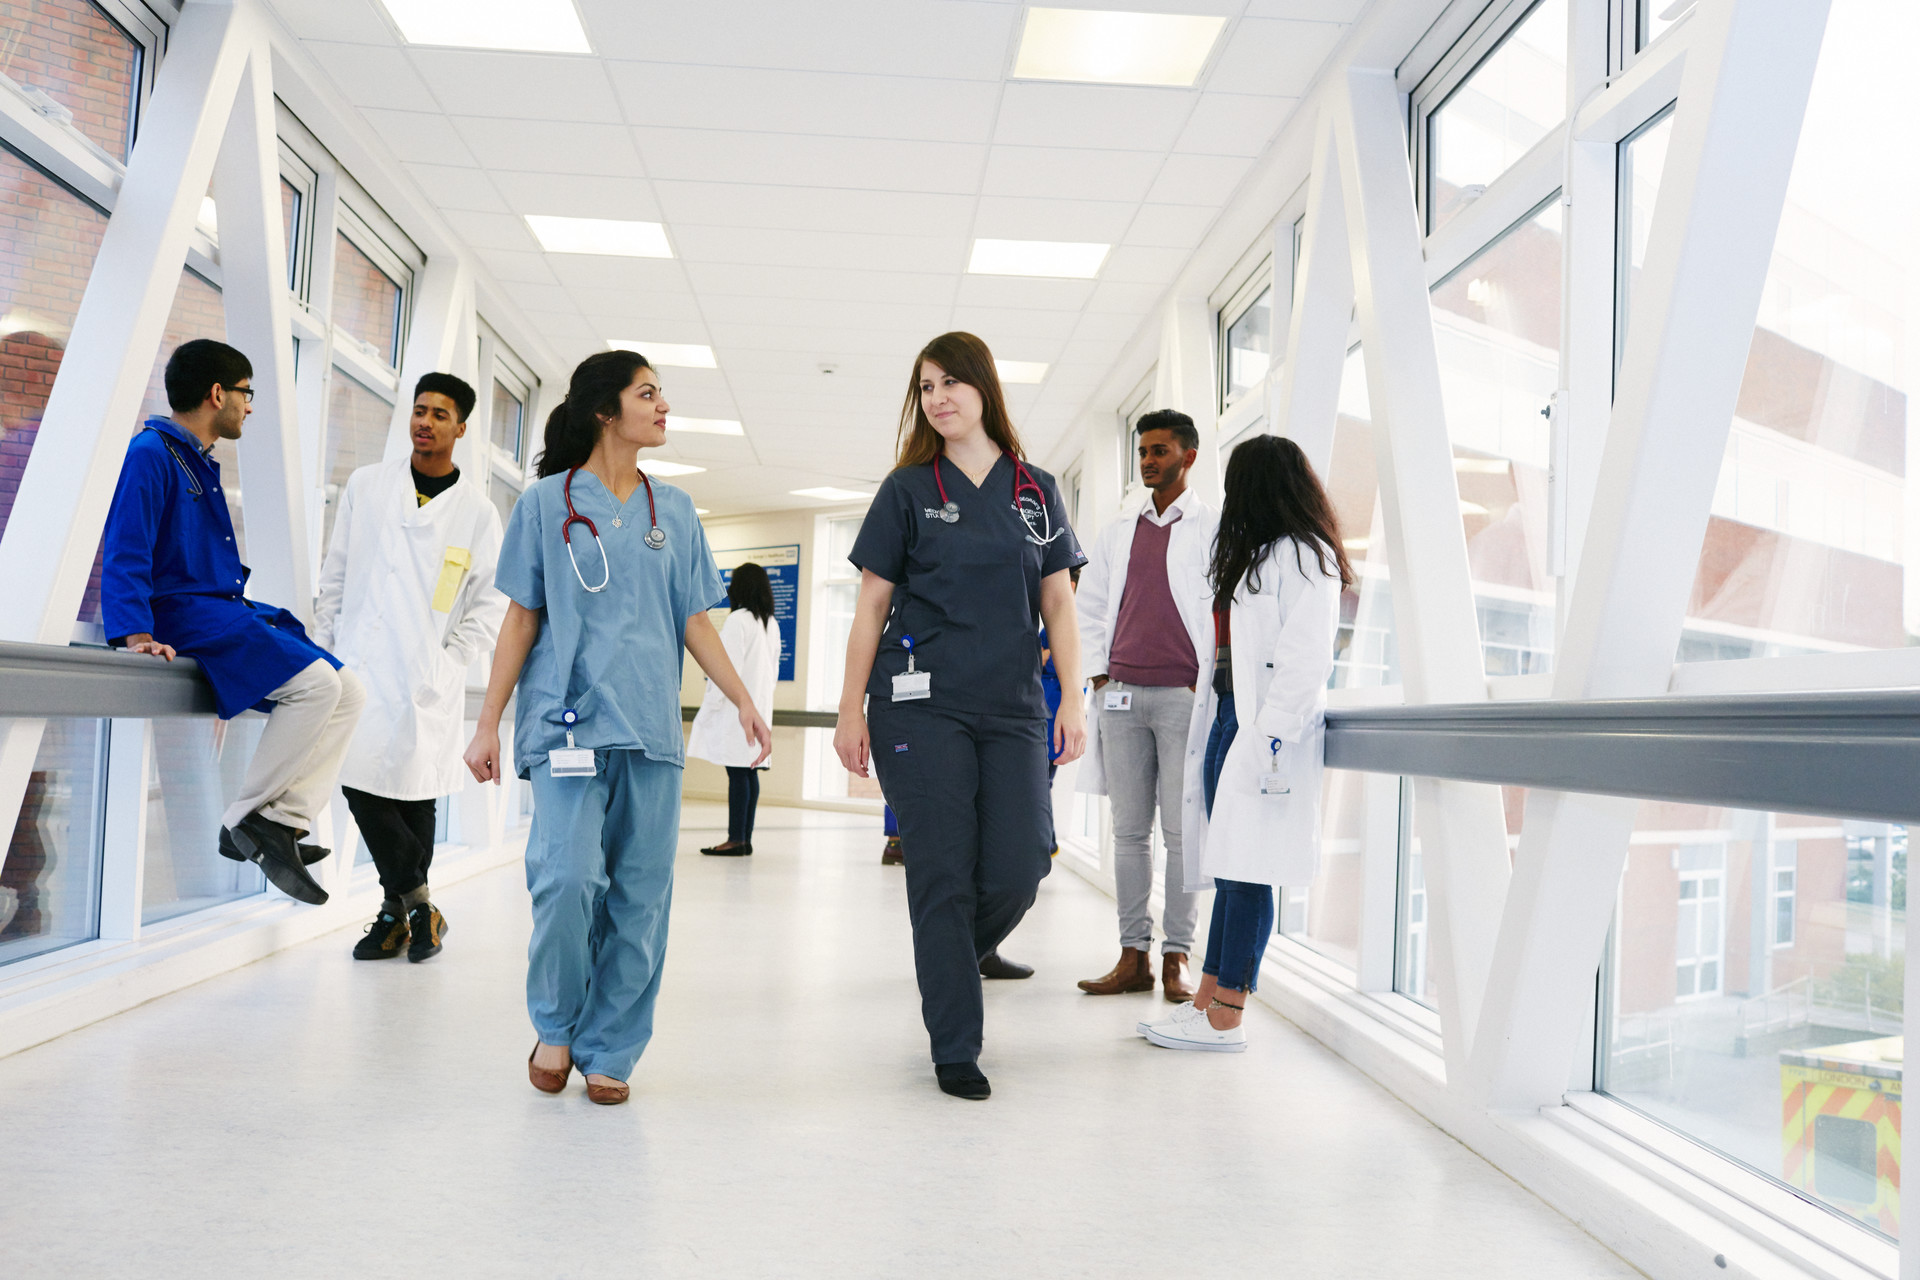 Medical students walking in a corridor.